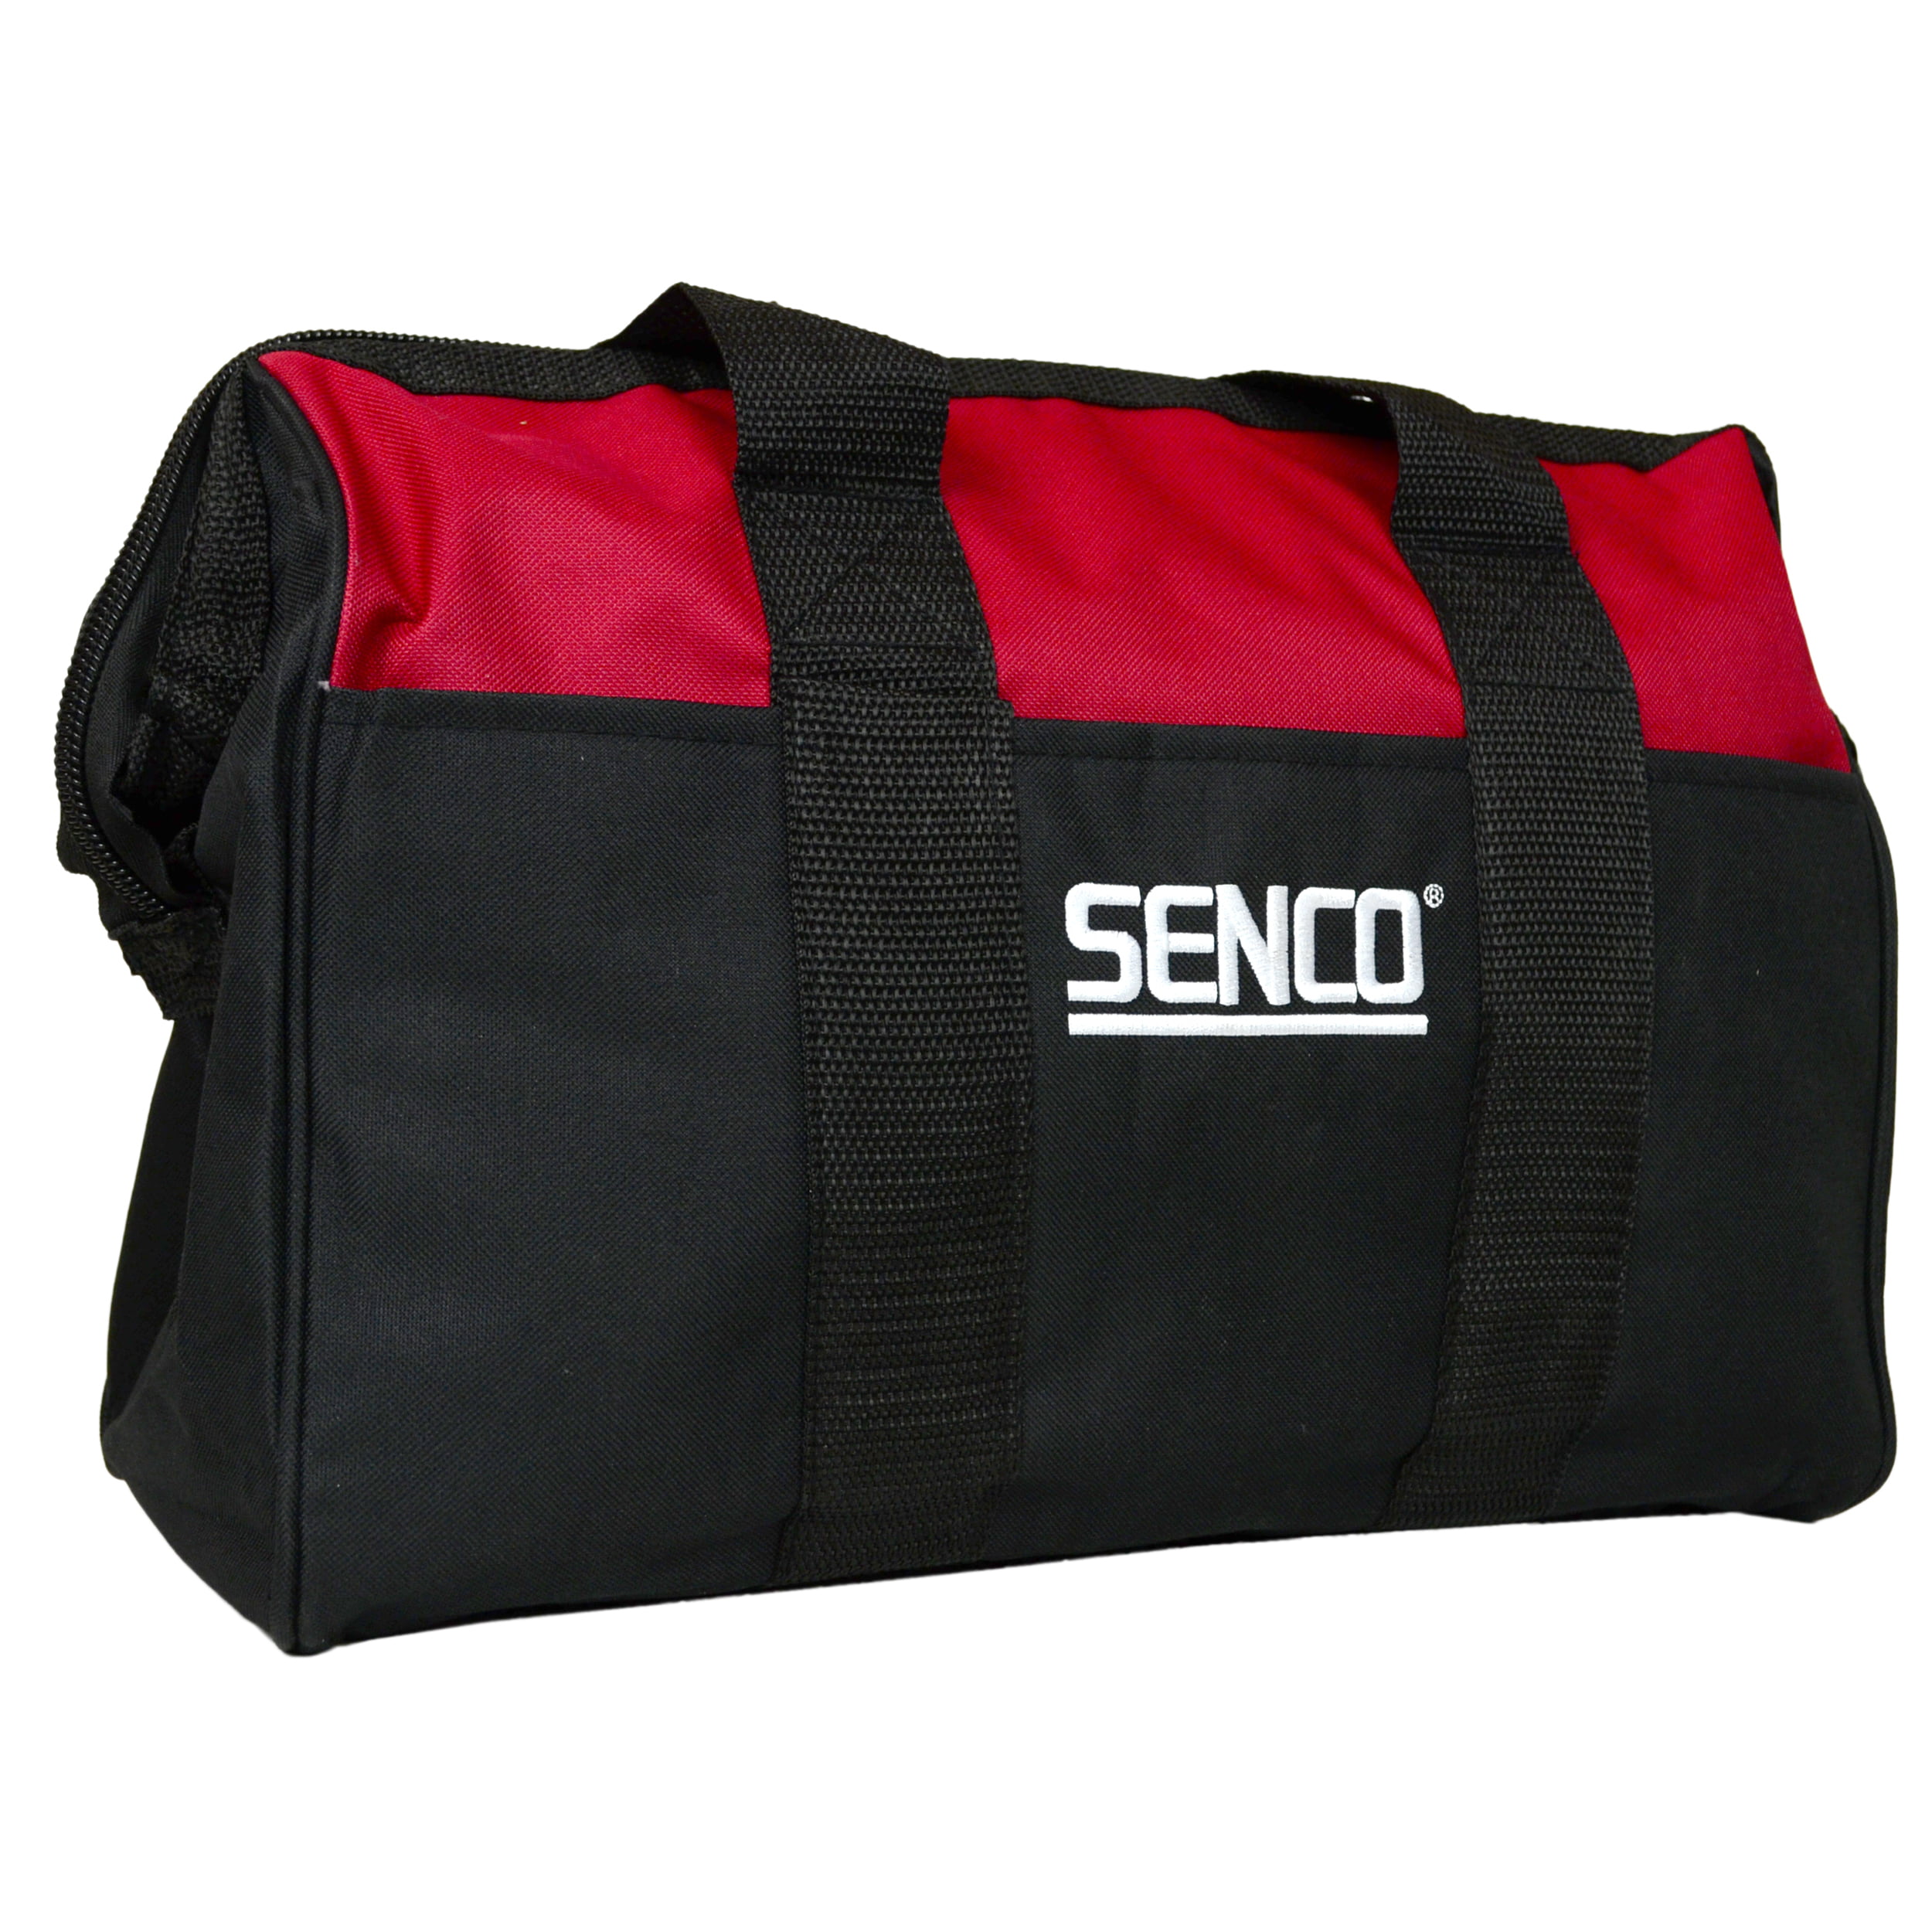 Senco 18" x 7" x 13" Zippered Tool Tote Bag with Handles